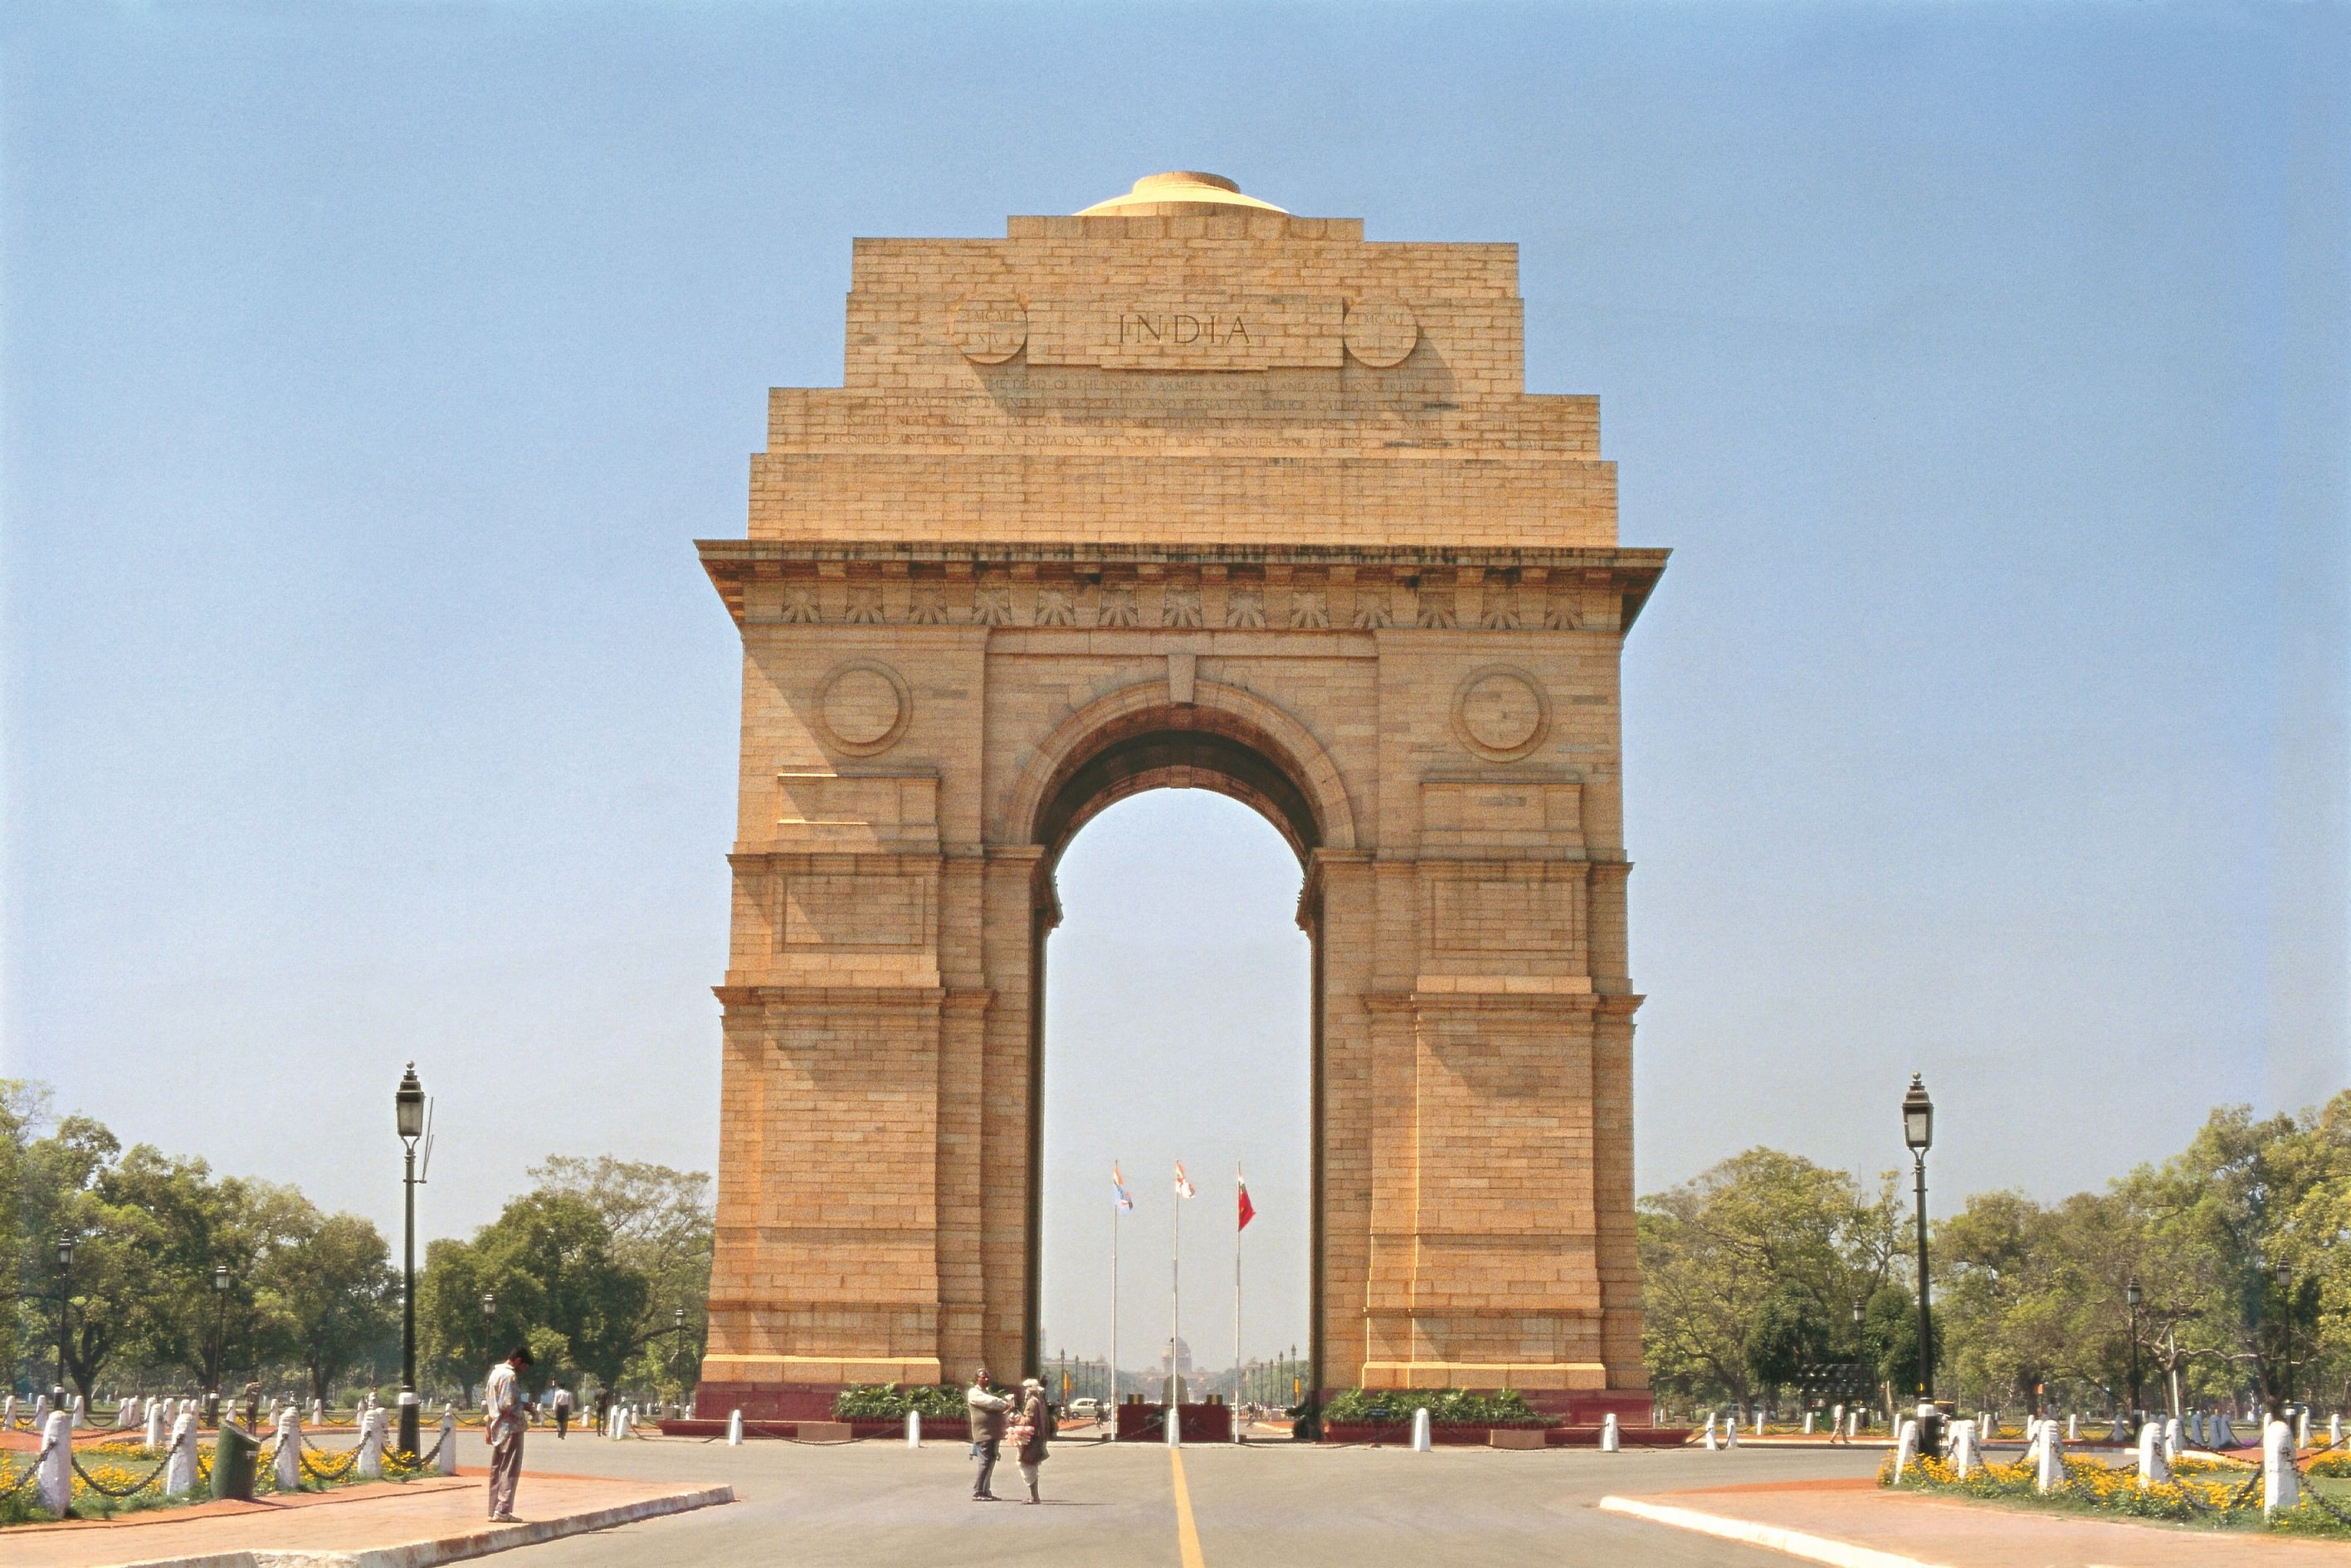 India gate photo